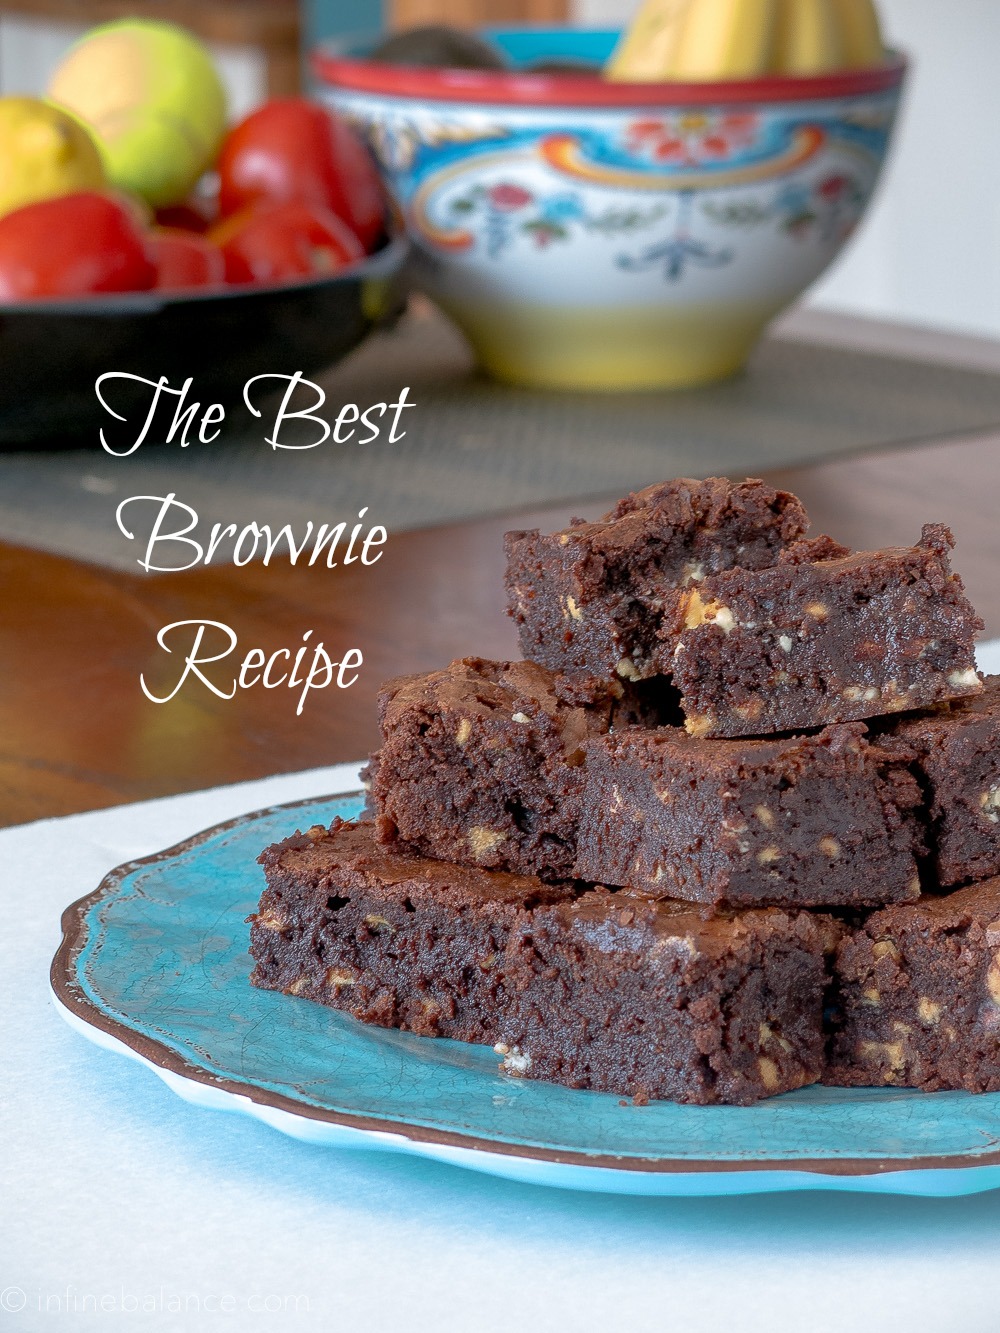 Best Brownie Recipe | www.infinebalance.com #recipe #chocolate